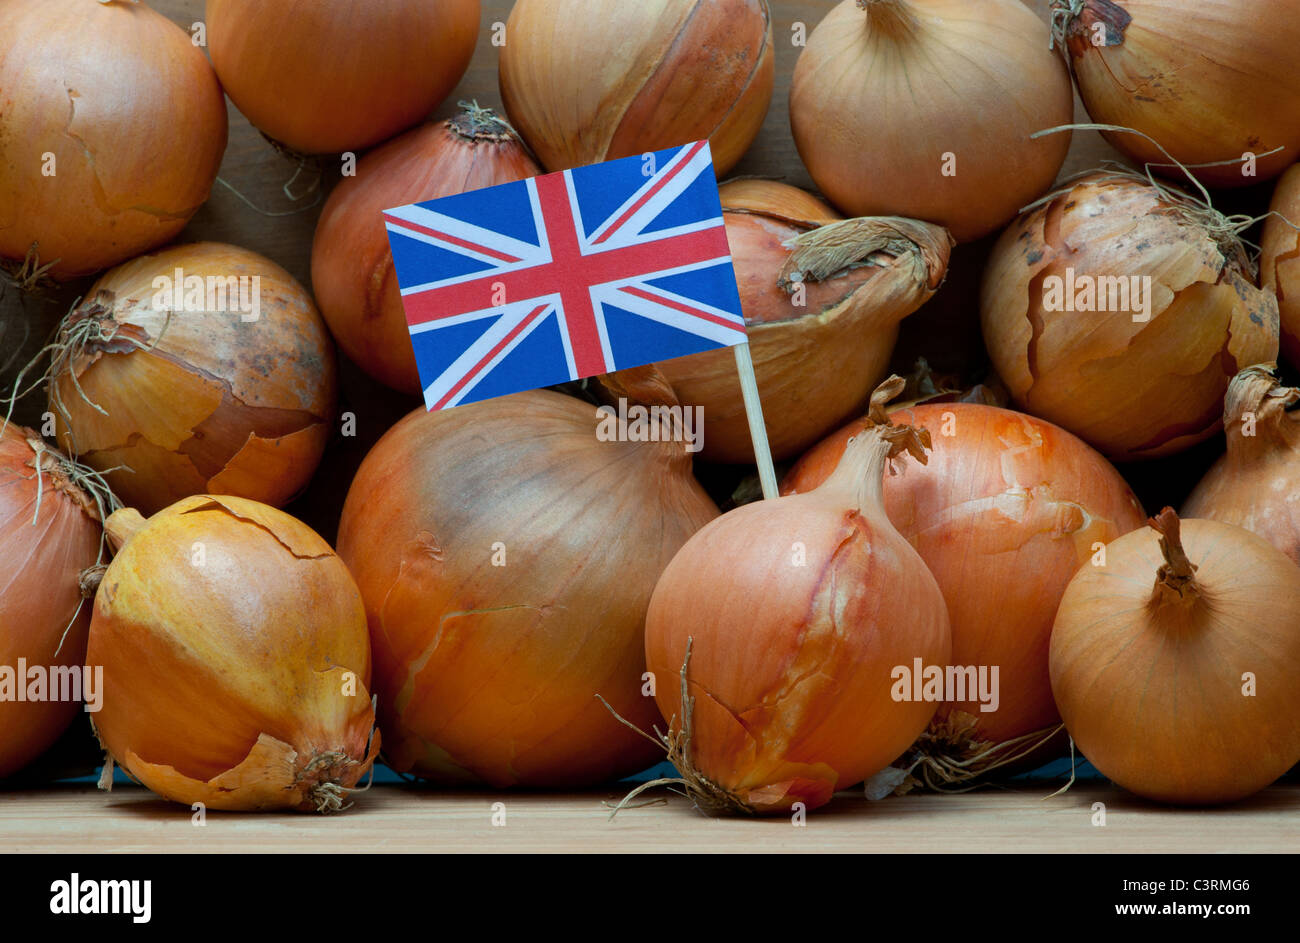 Display of raw onions Stock Photo